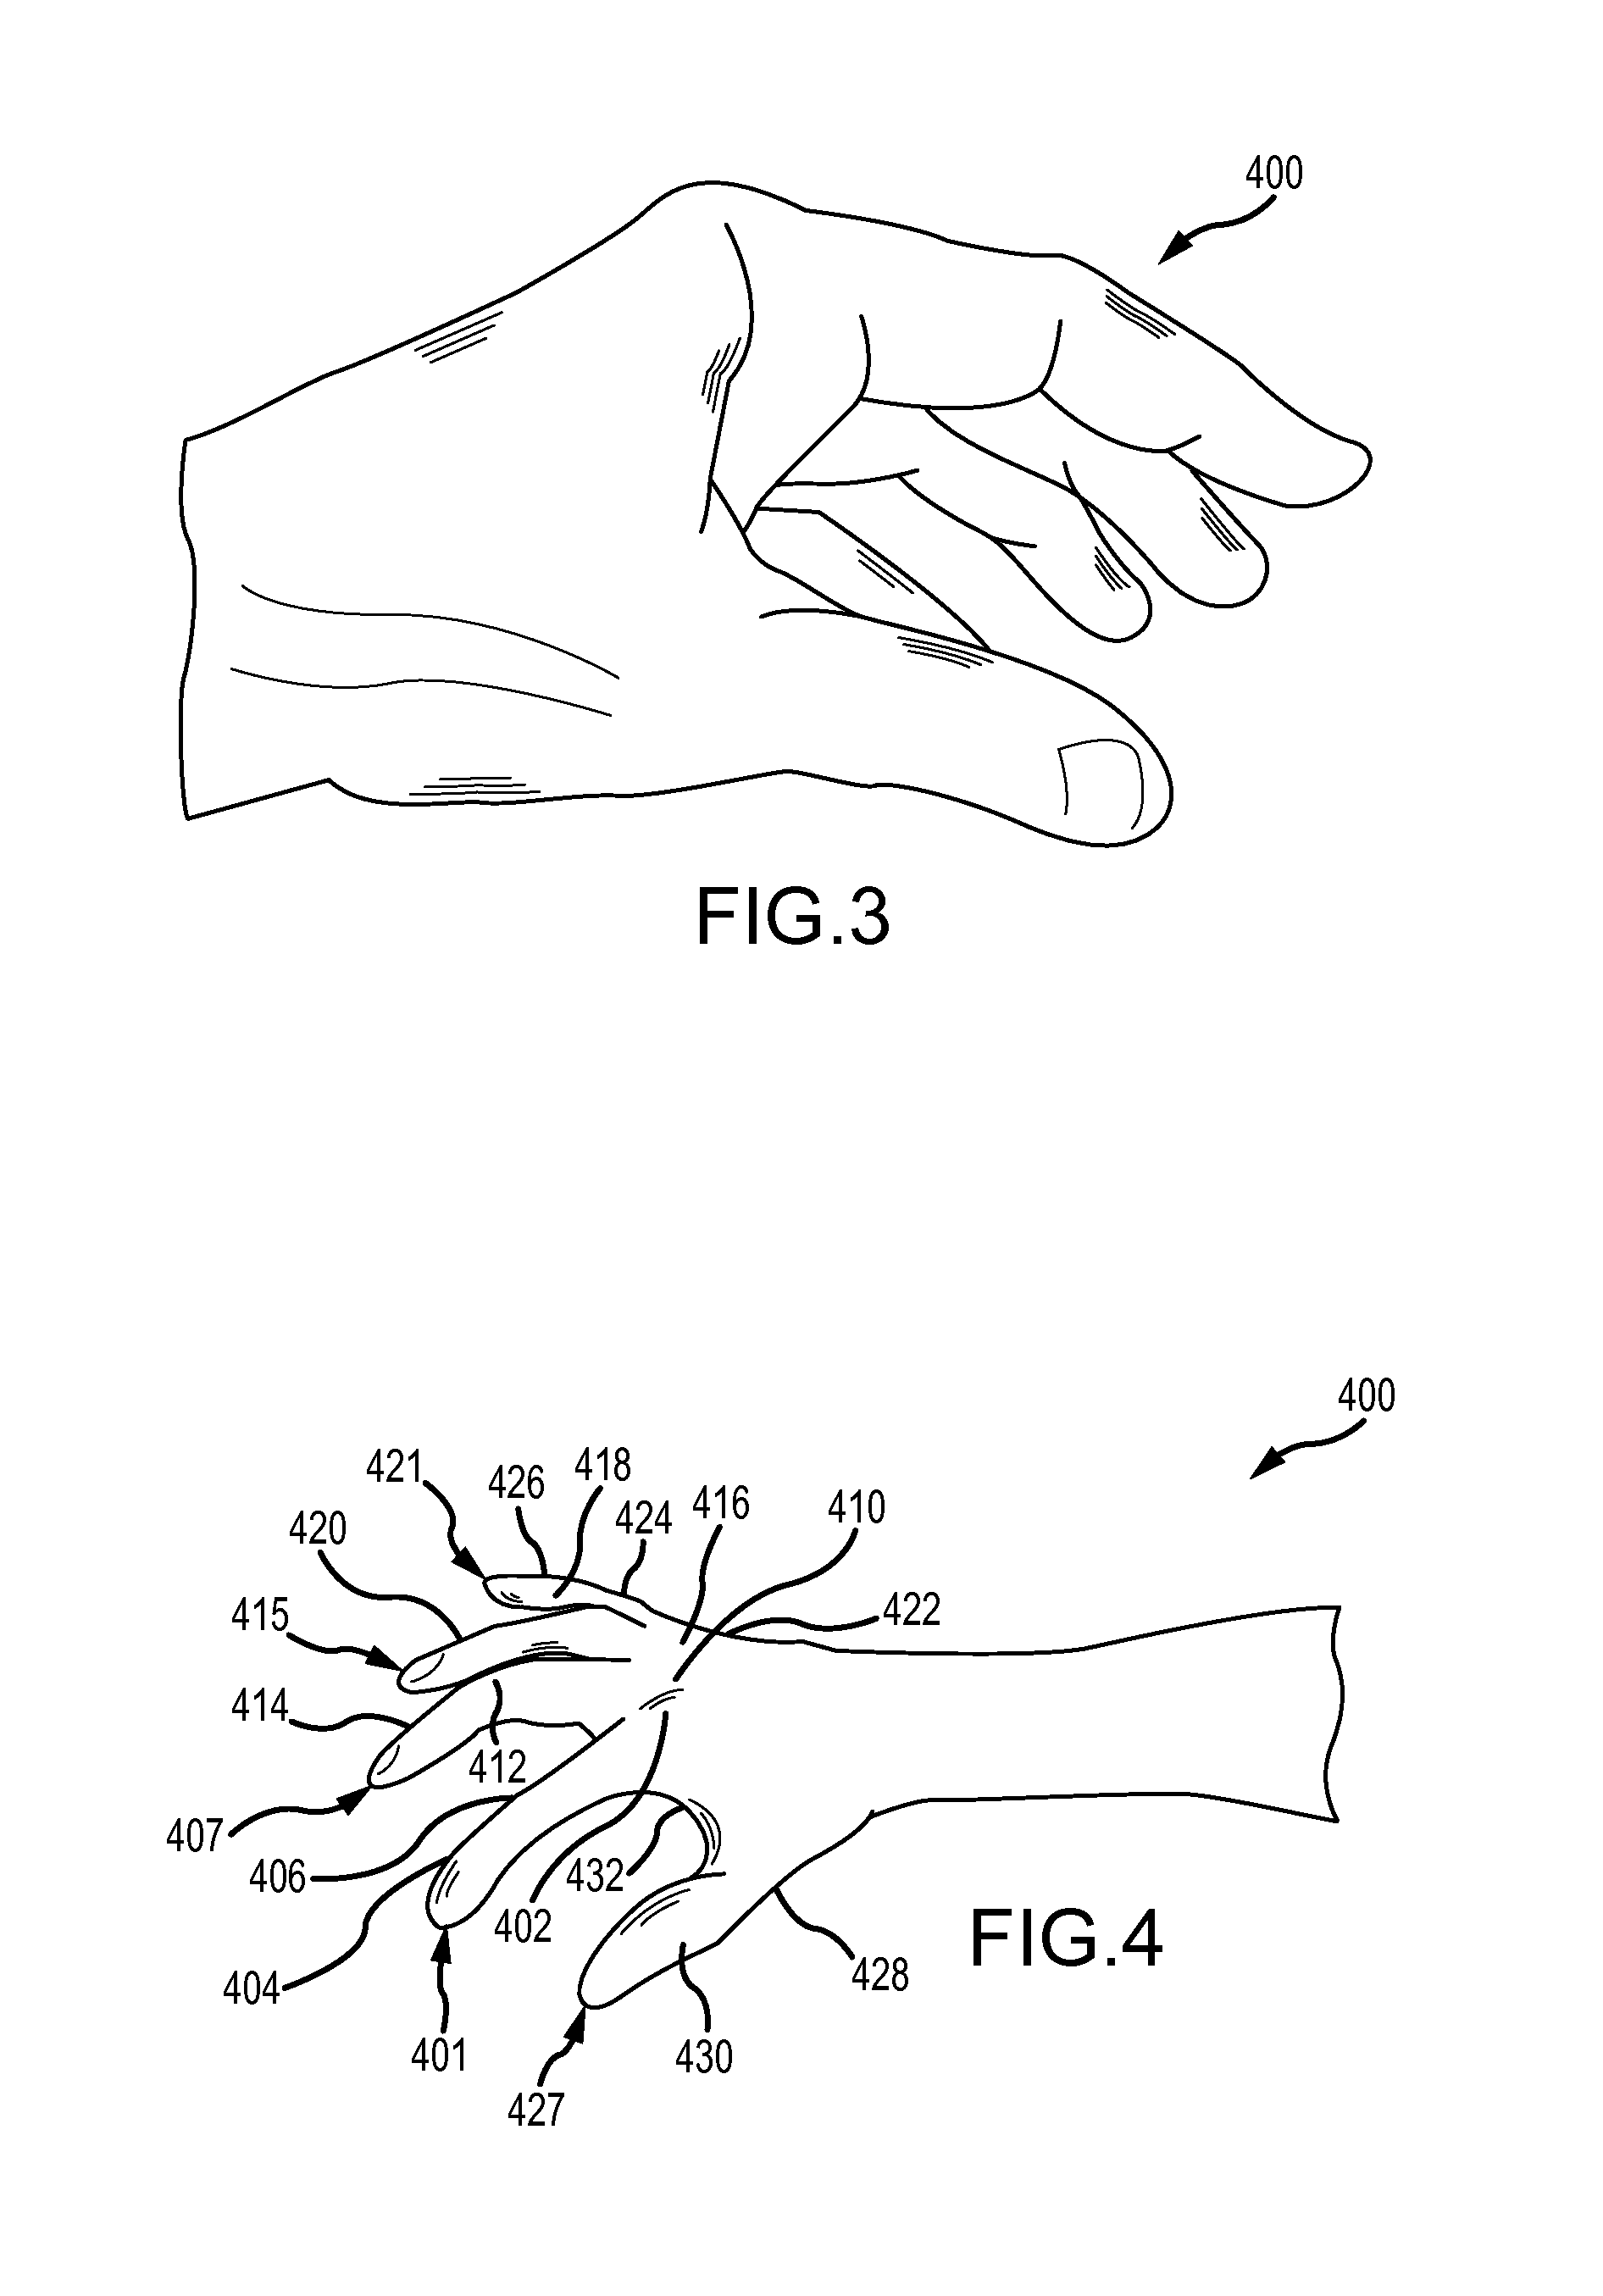 Ergonomic glove for medical procedures